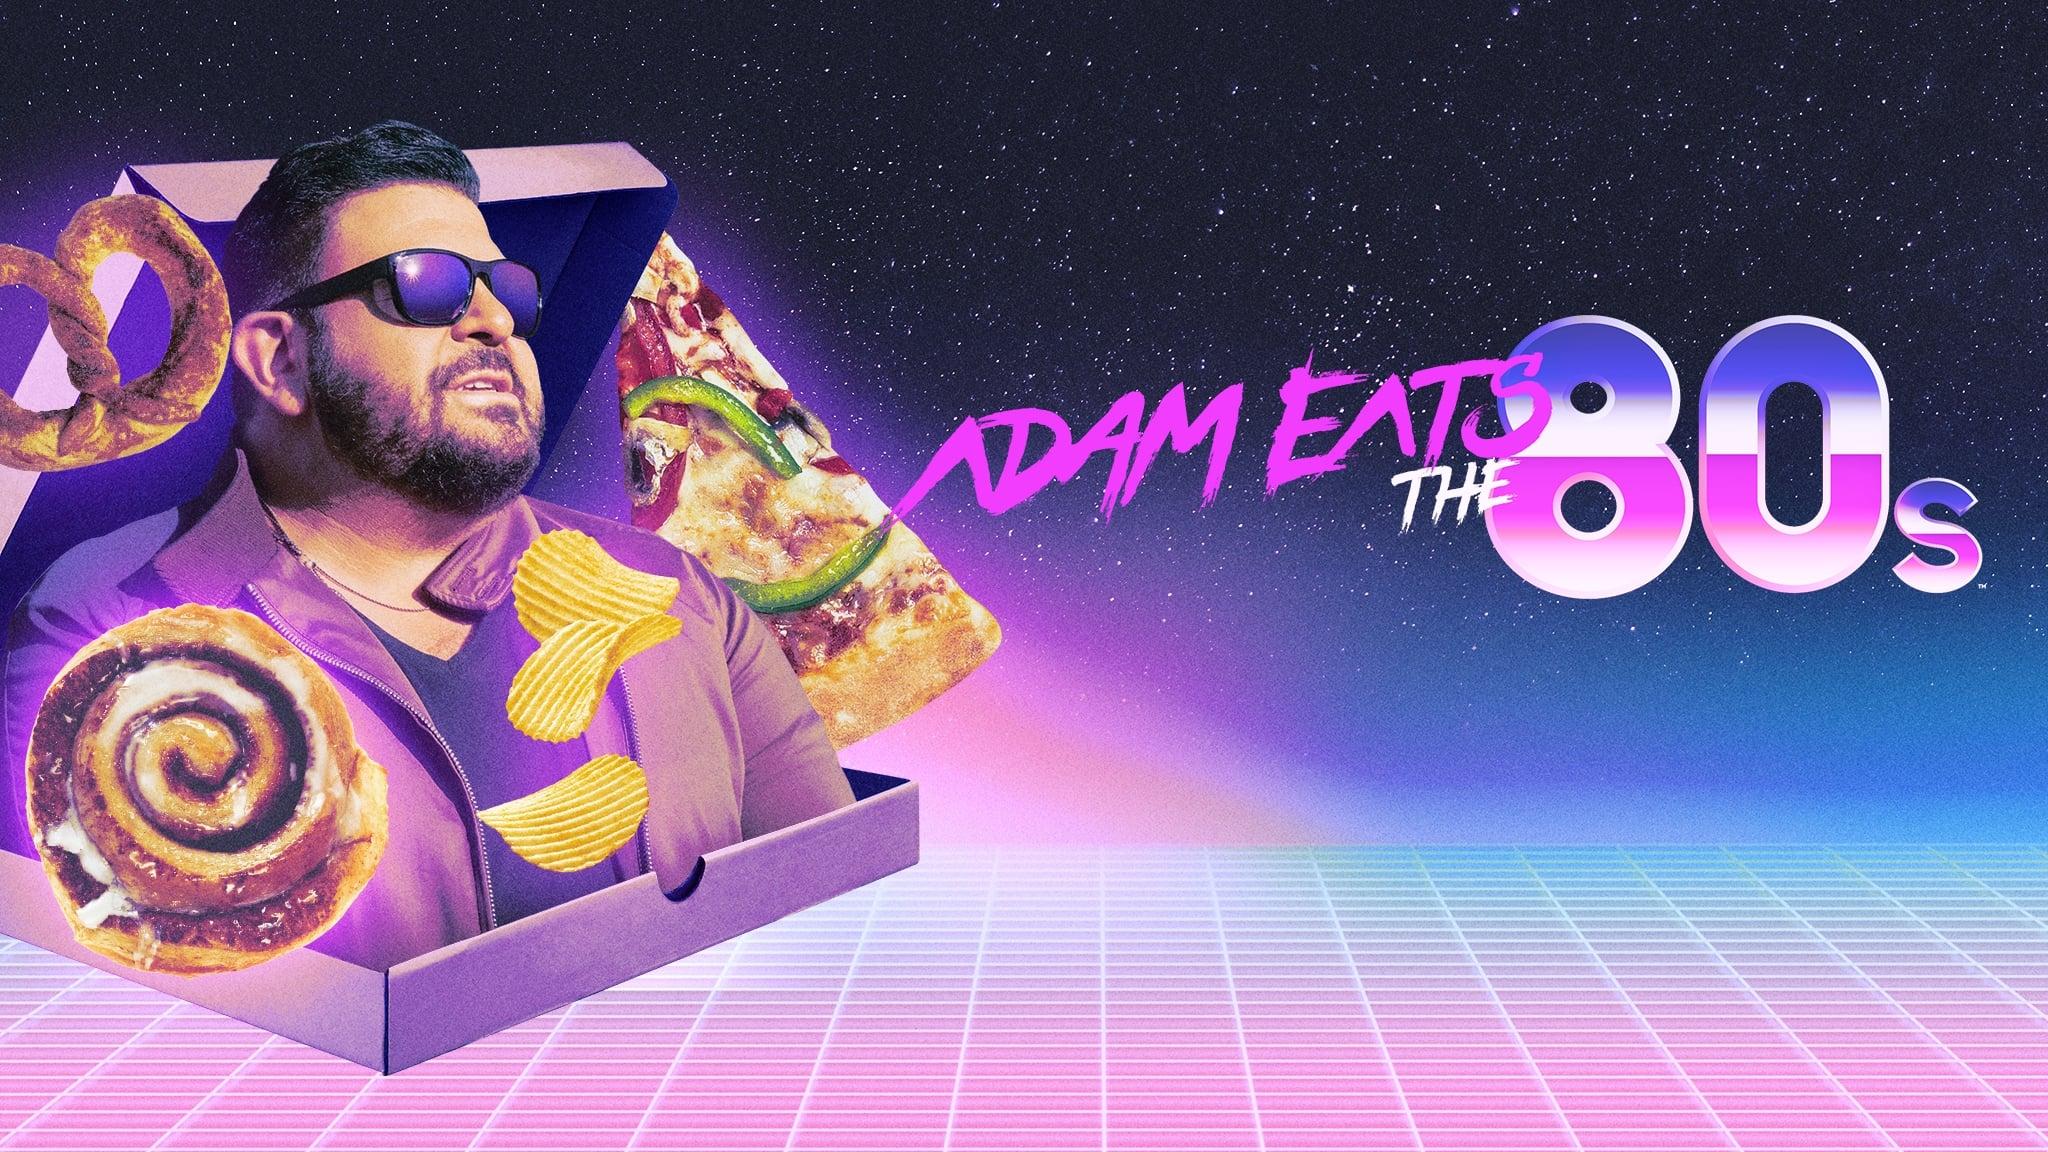 Adam Eats the 80s backdrop